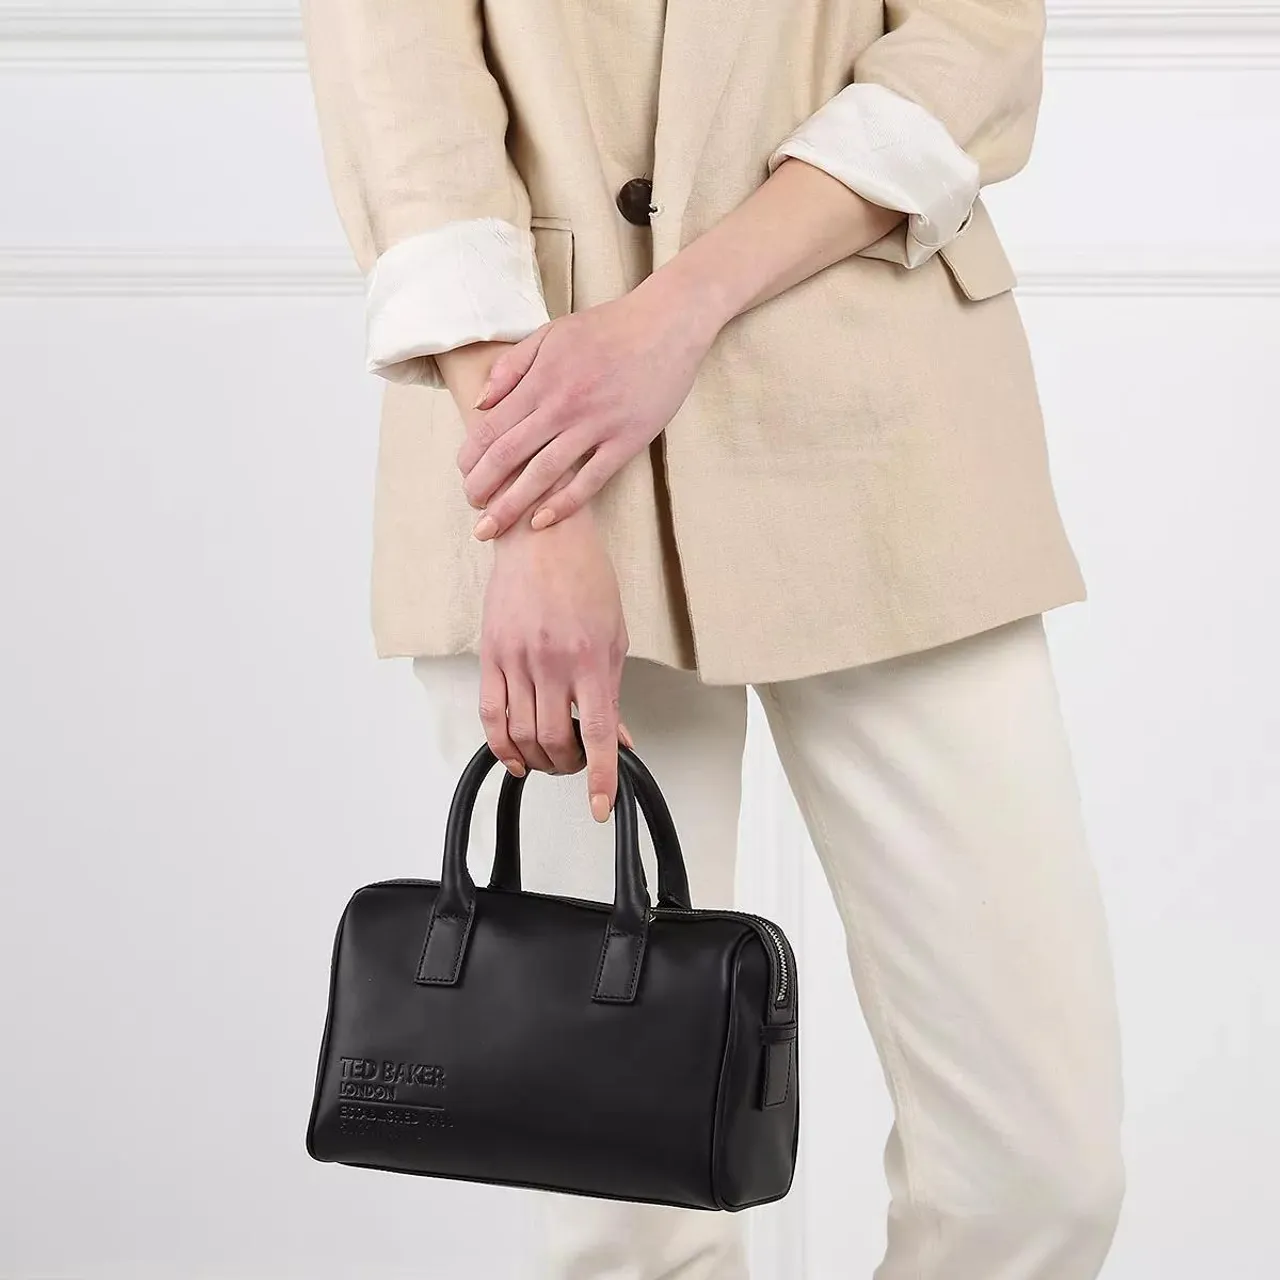 Ted Baker Travel Bags - Daralia - black - Travel Bags for ladies